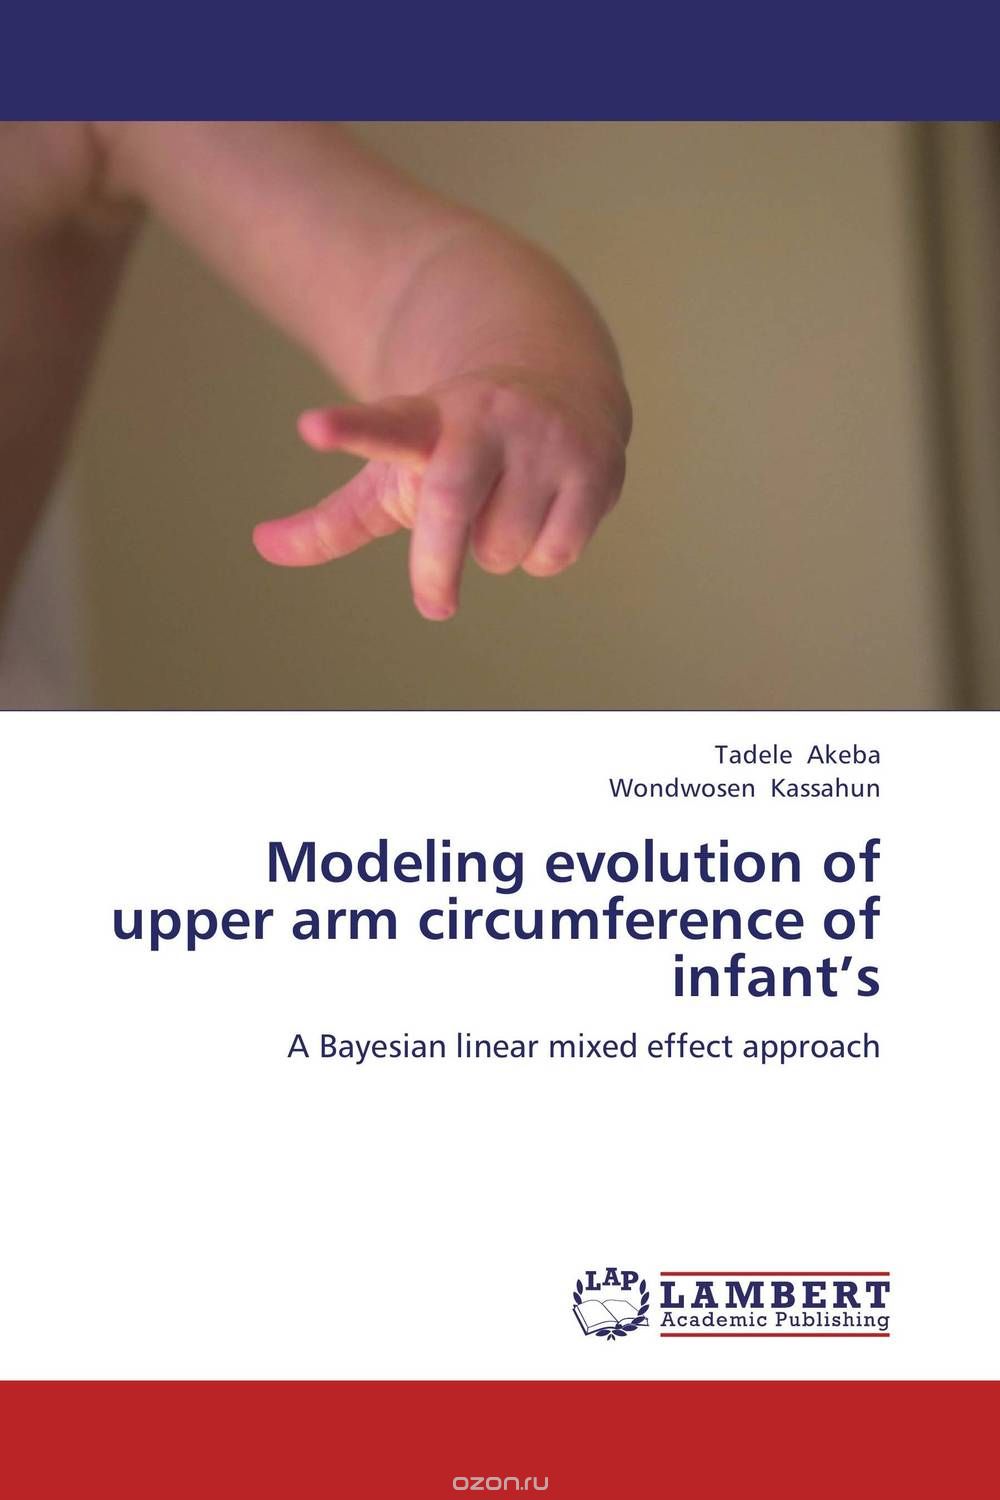 Скачать книгу "Modeling evolution of upper arm circumference of infant’s"